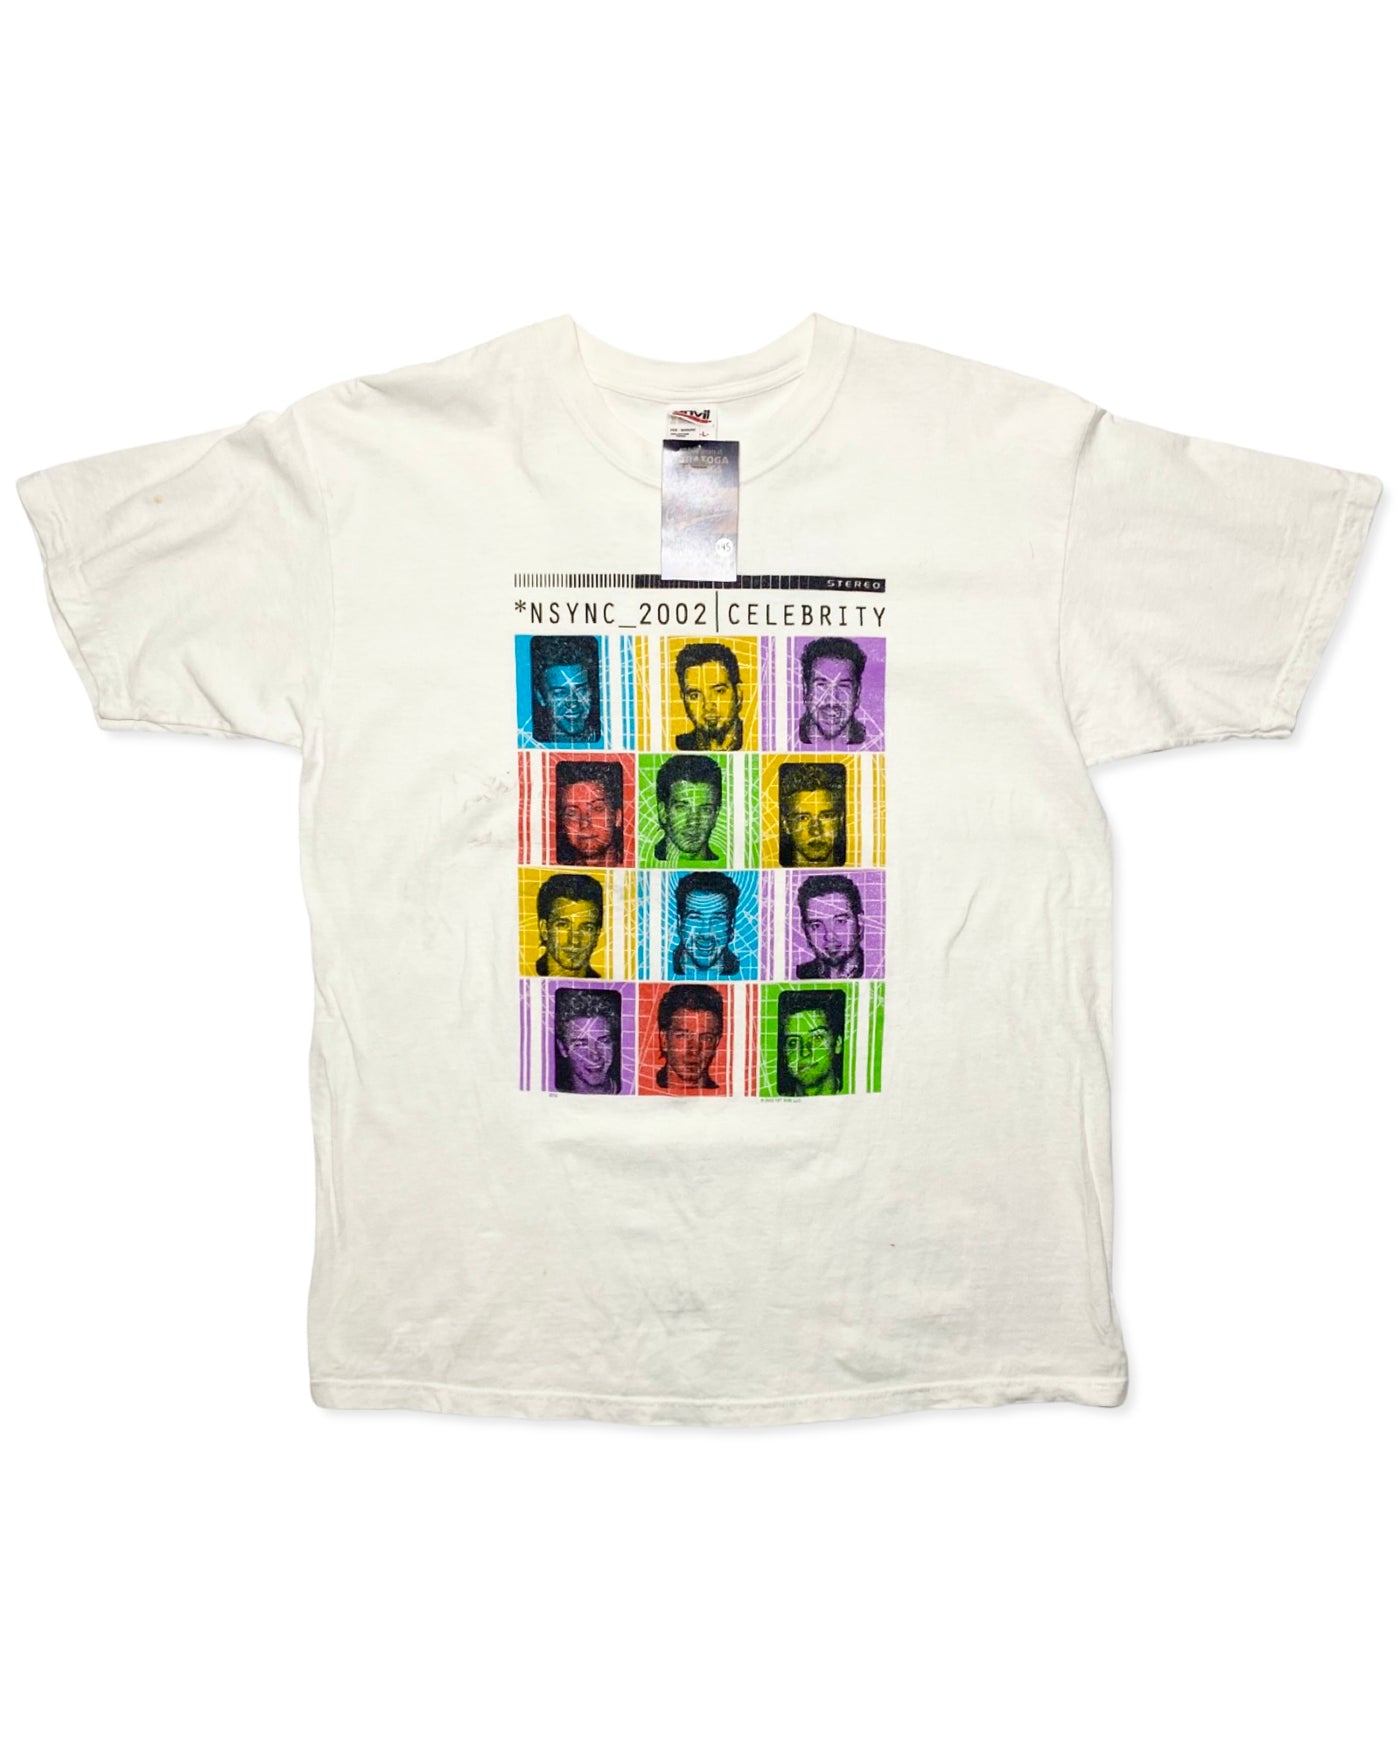 2002 *NSYNC Celebrity Tour T-Shirt